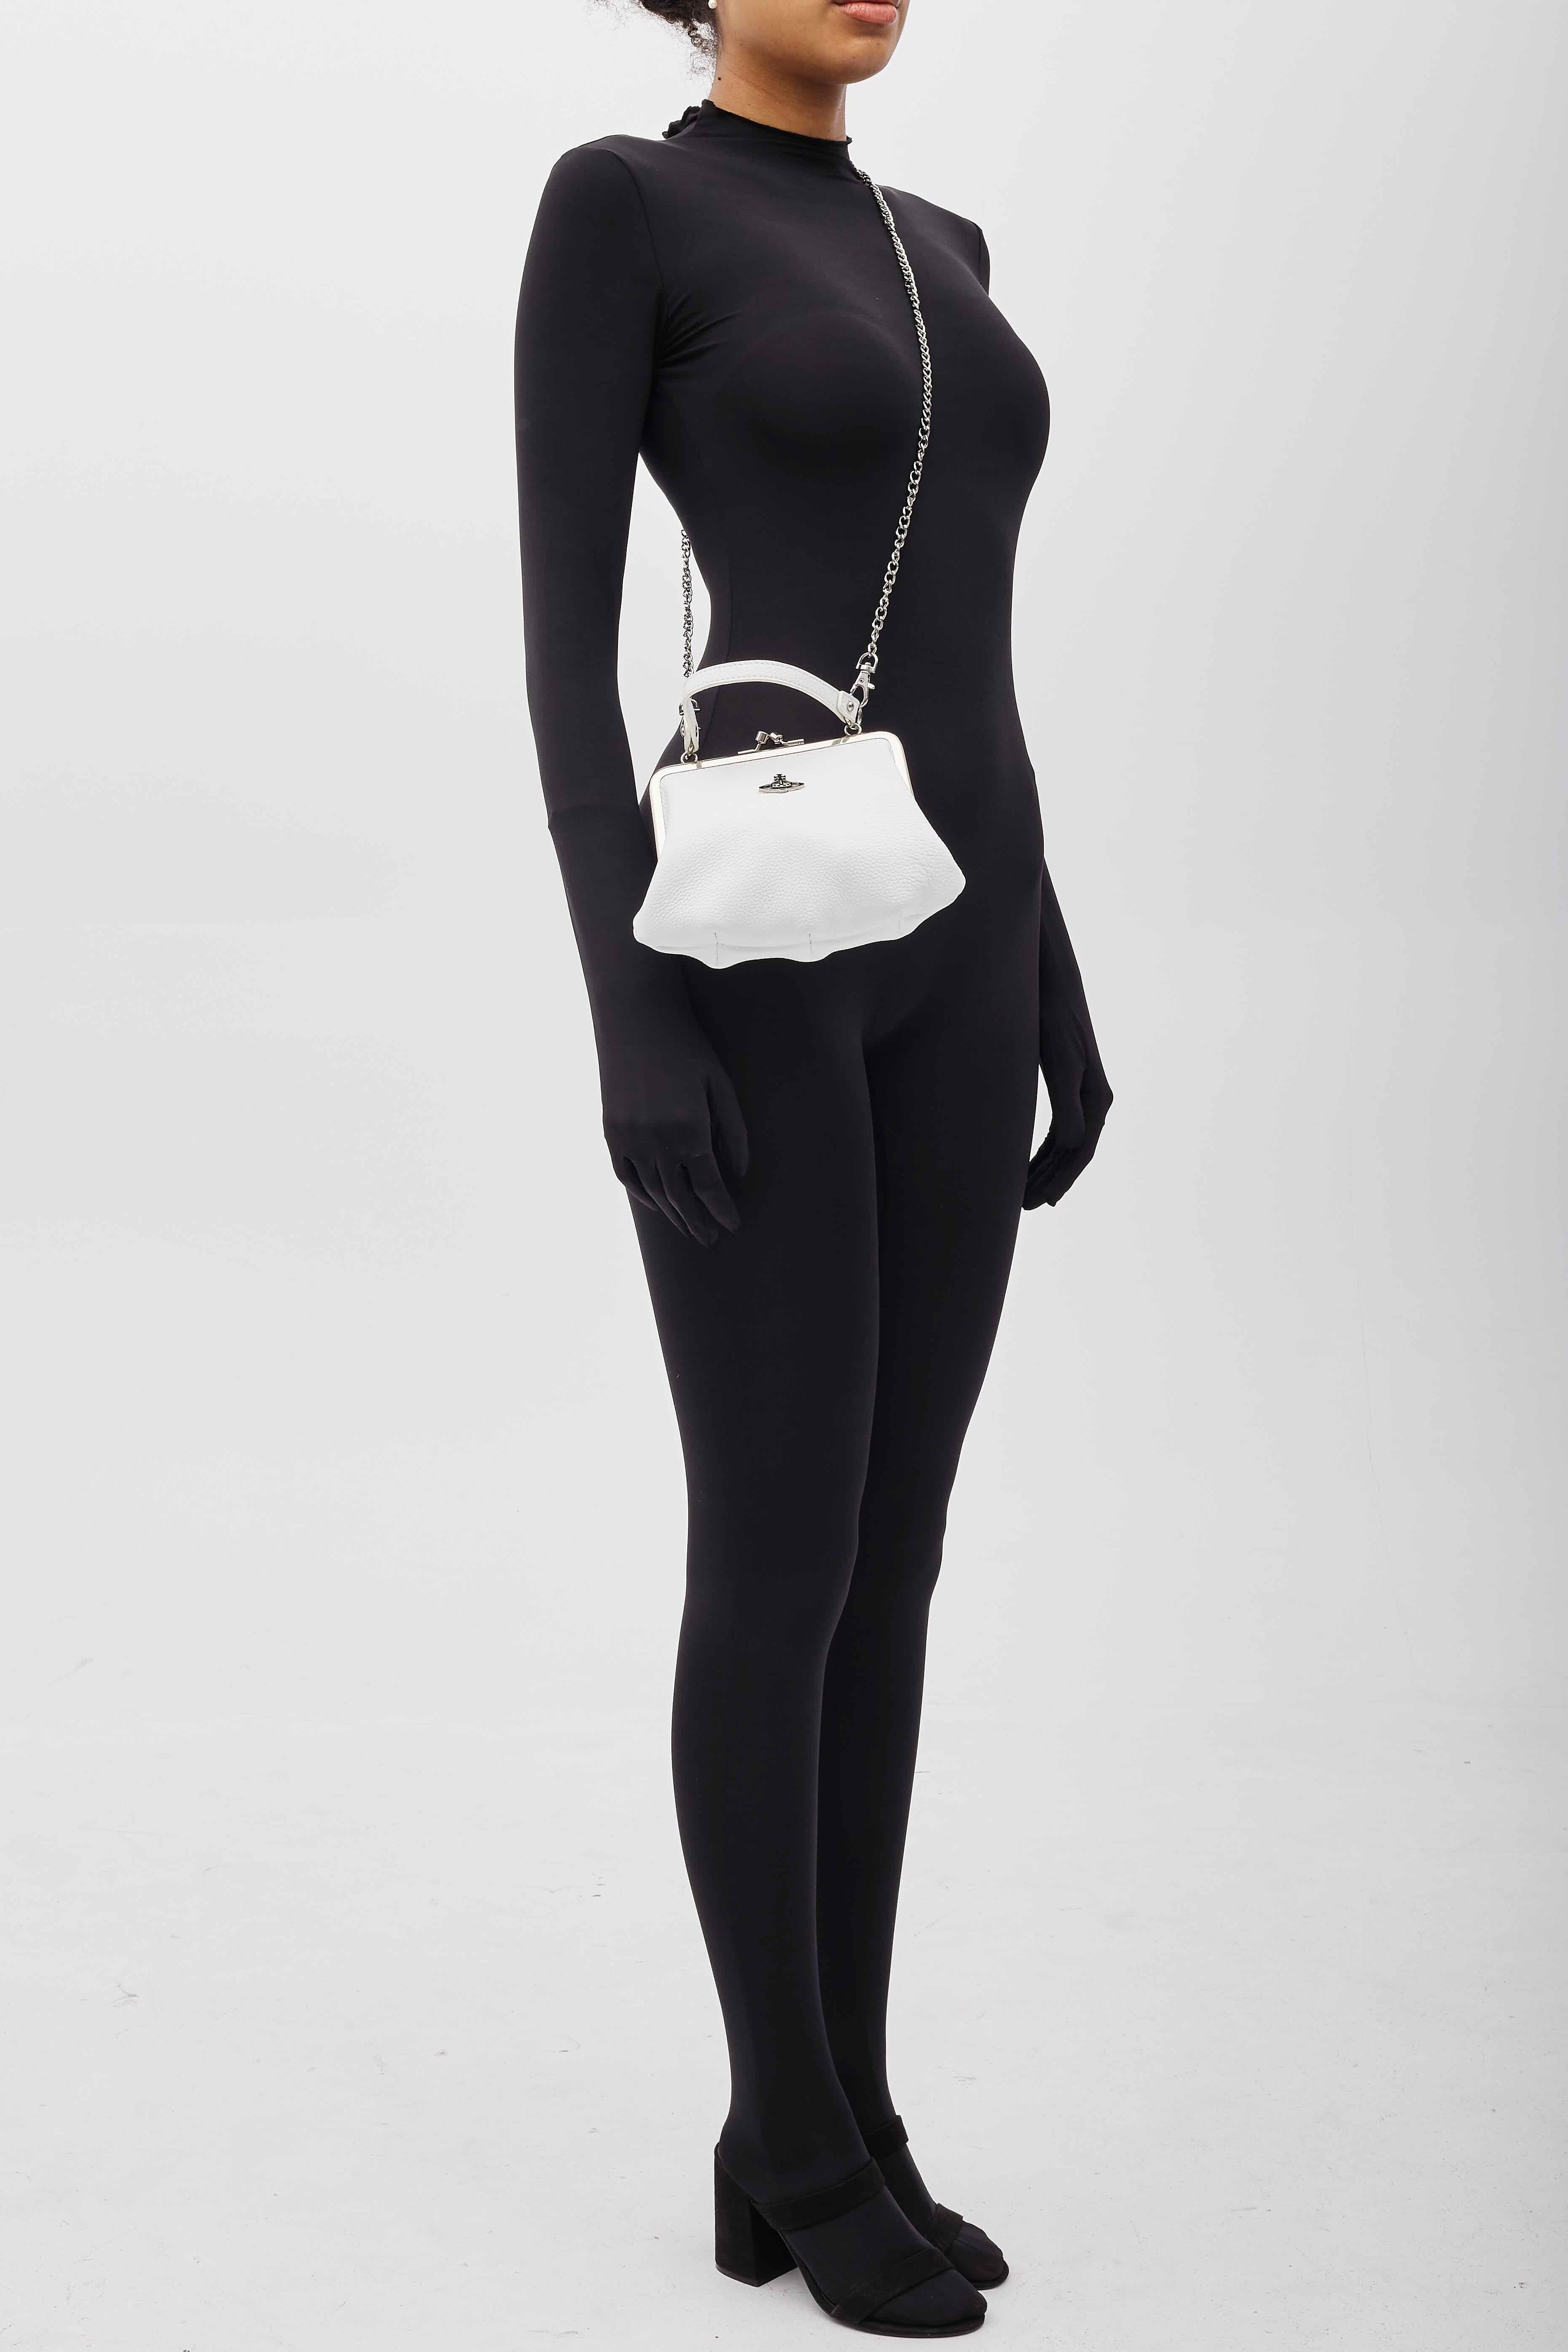 Vivienne Westwood White Leather Granny Frame Bag For Sale 3